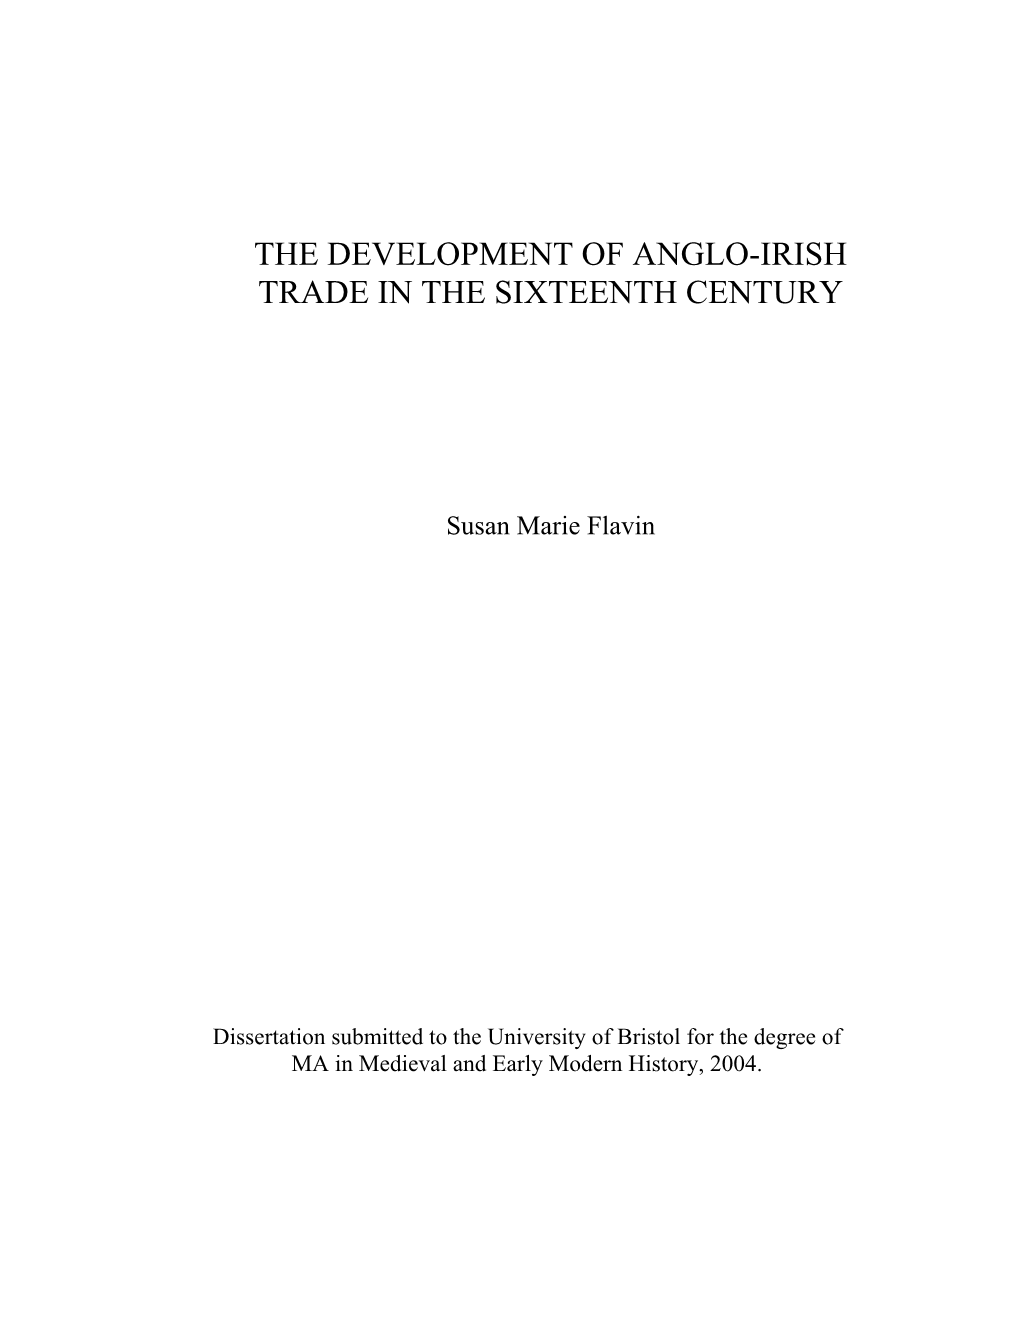 The Development of Anglo-Irish Trade in the Sixteenth Century